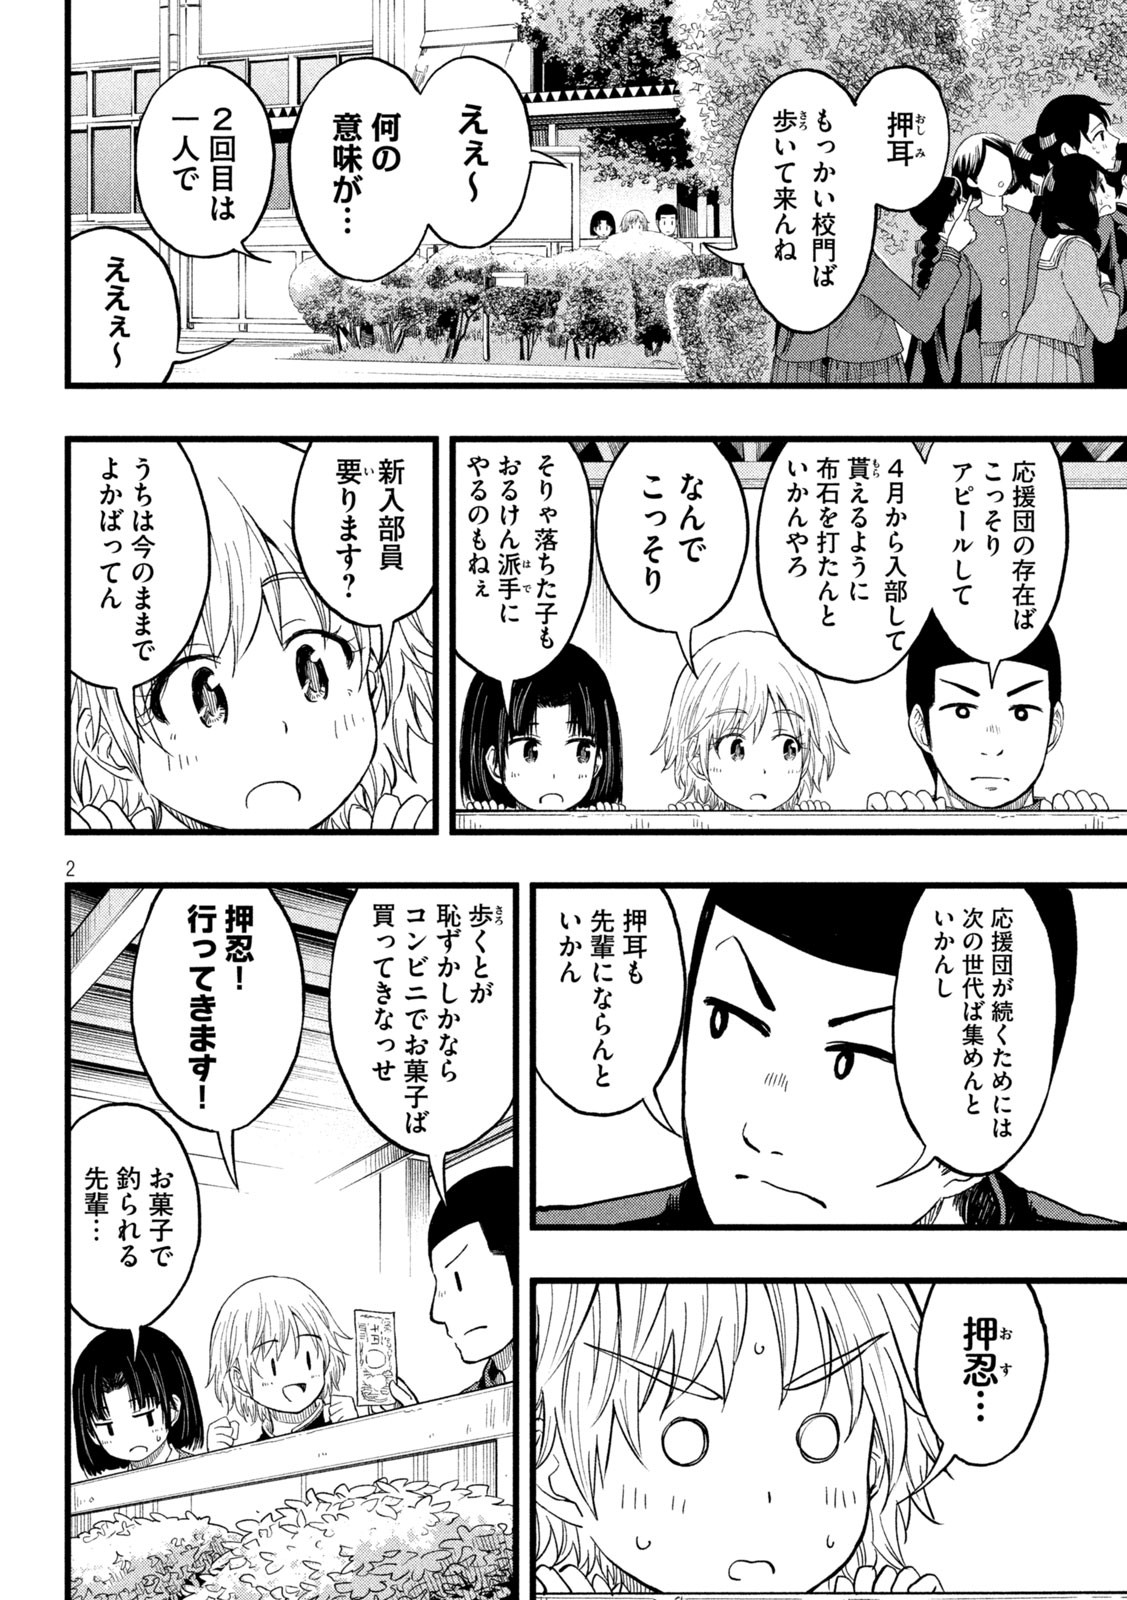 Koharu haru! - Chapter 92 - Page 2